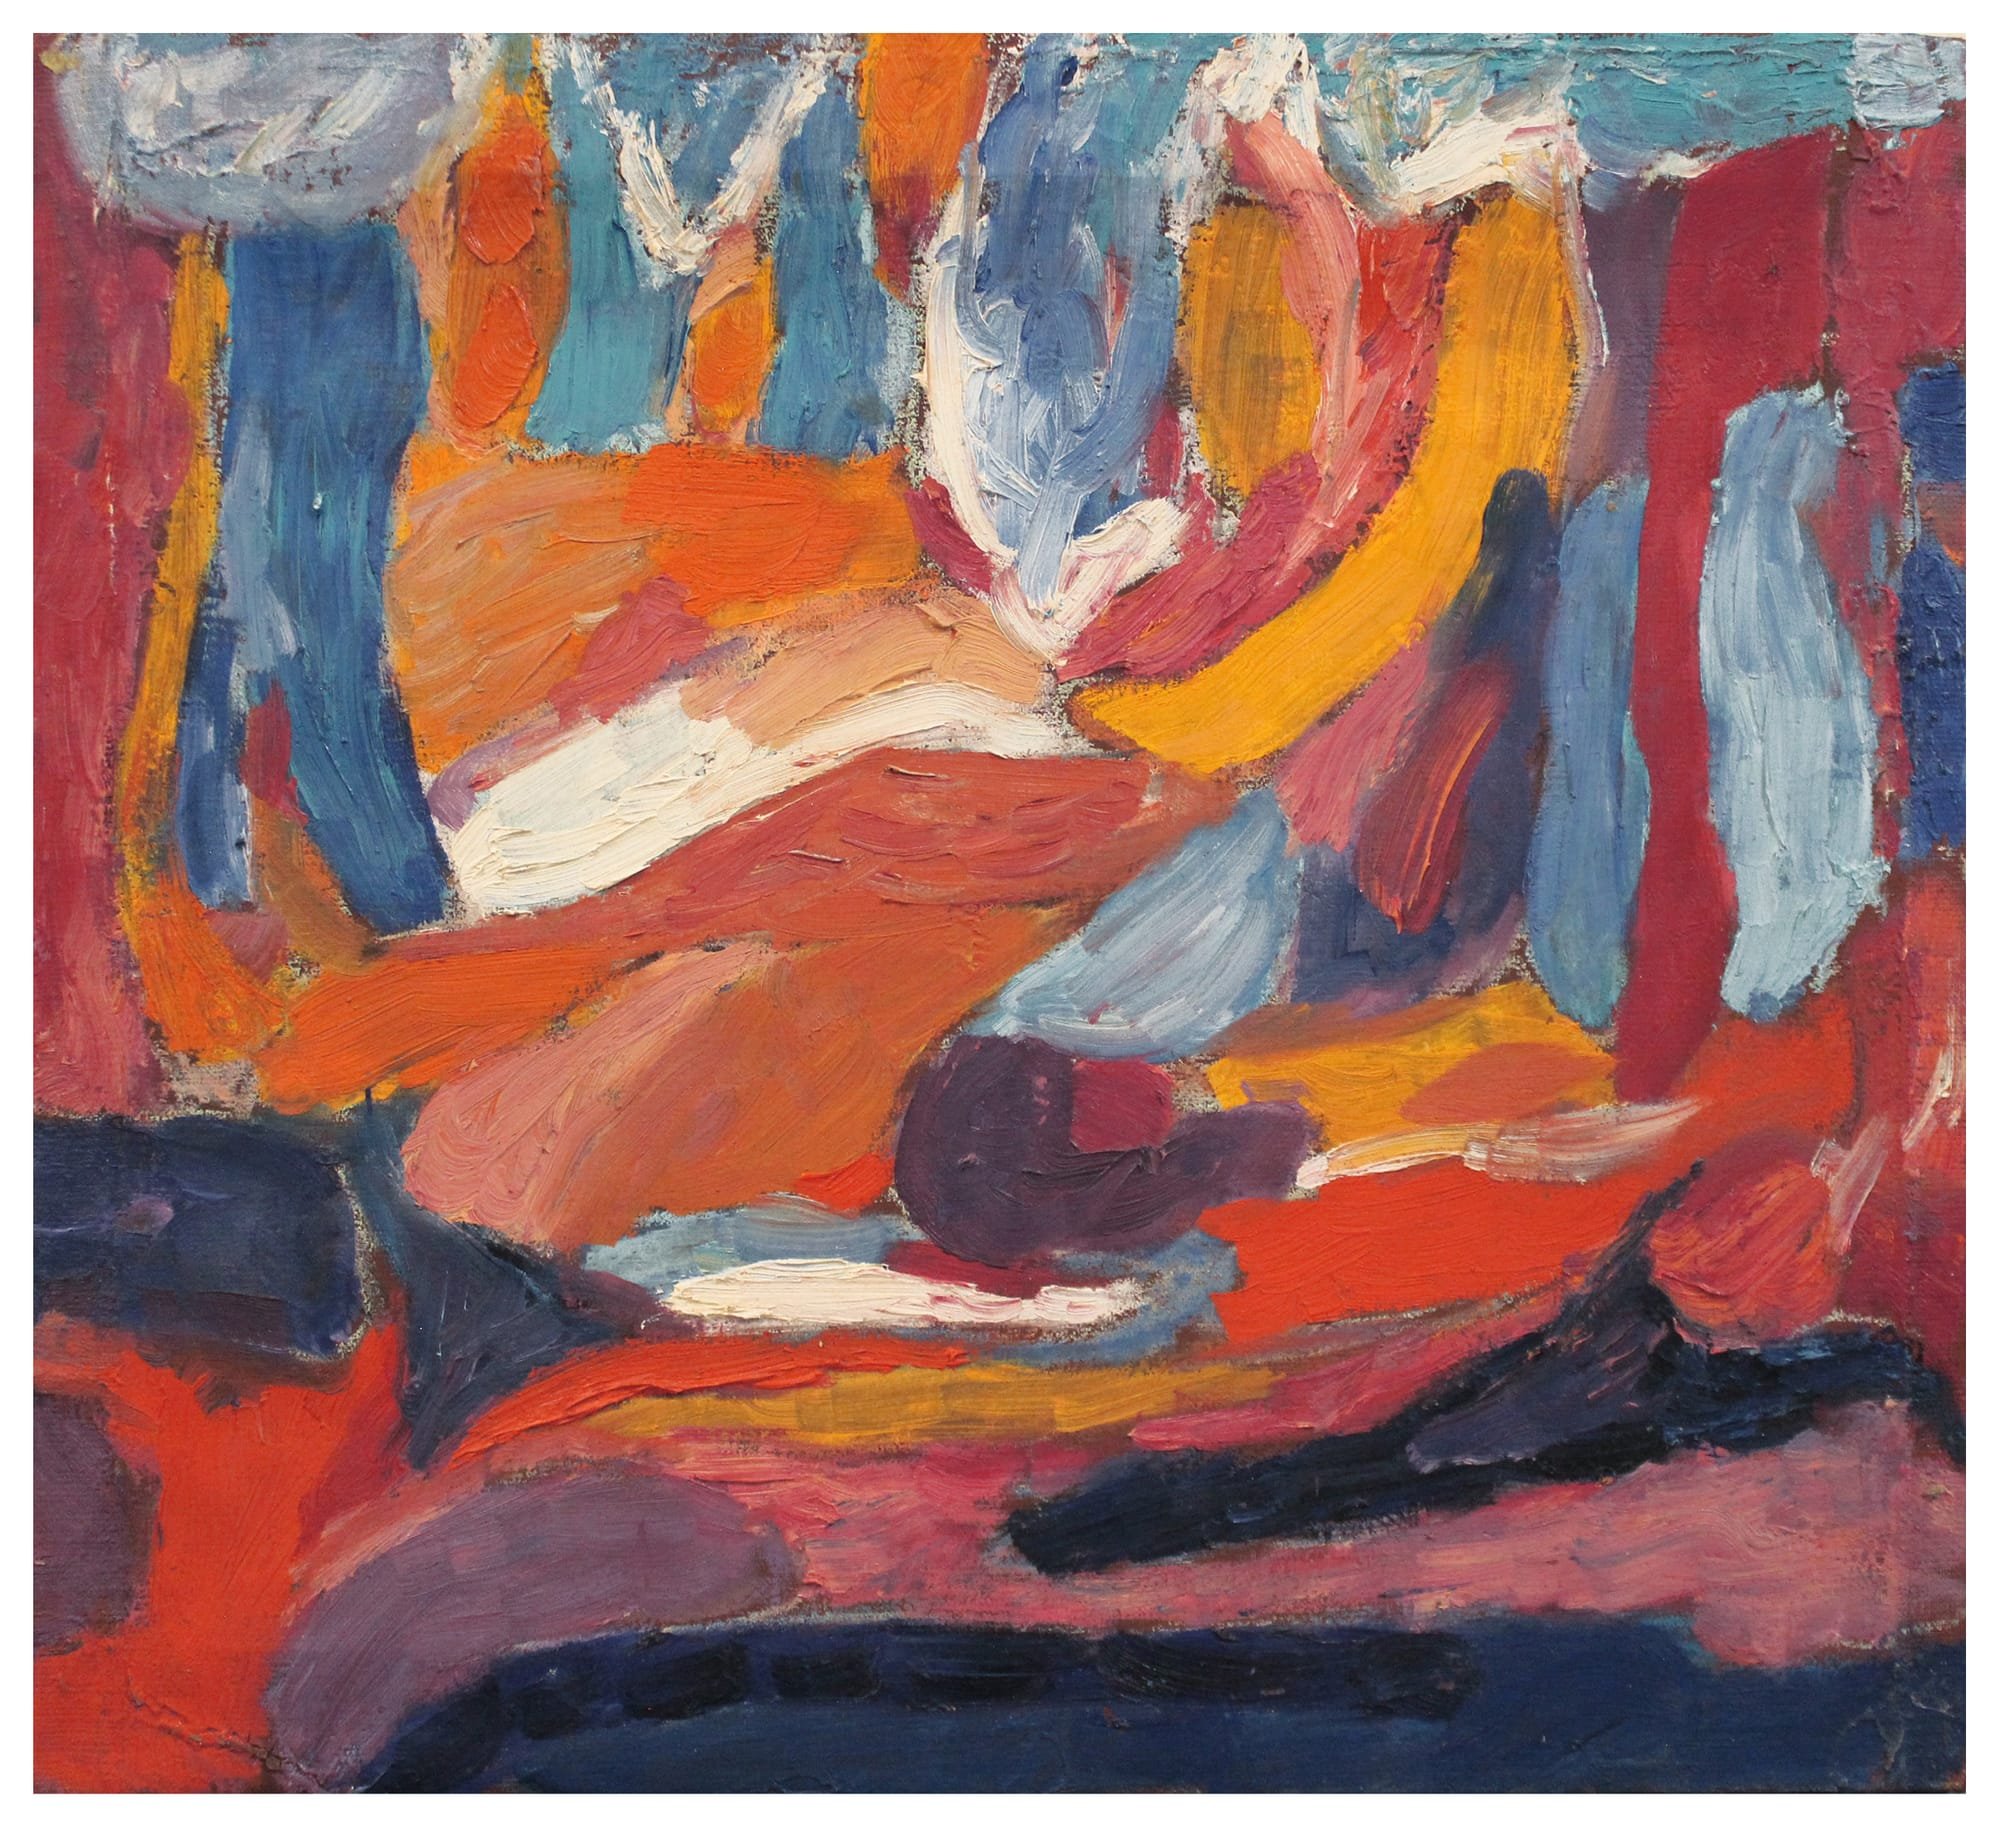 Abstract colour study, No. 4, 2004